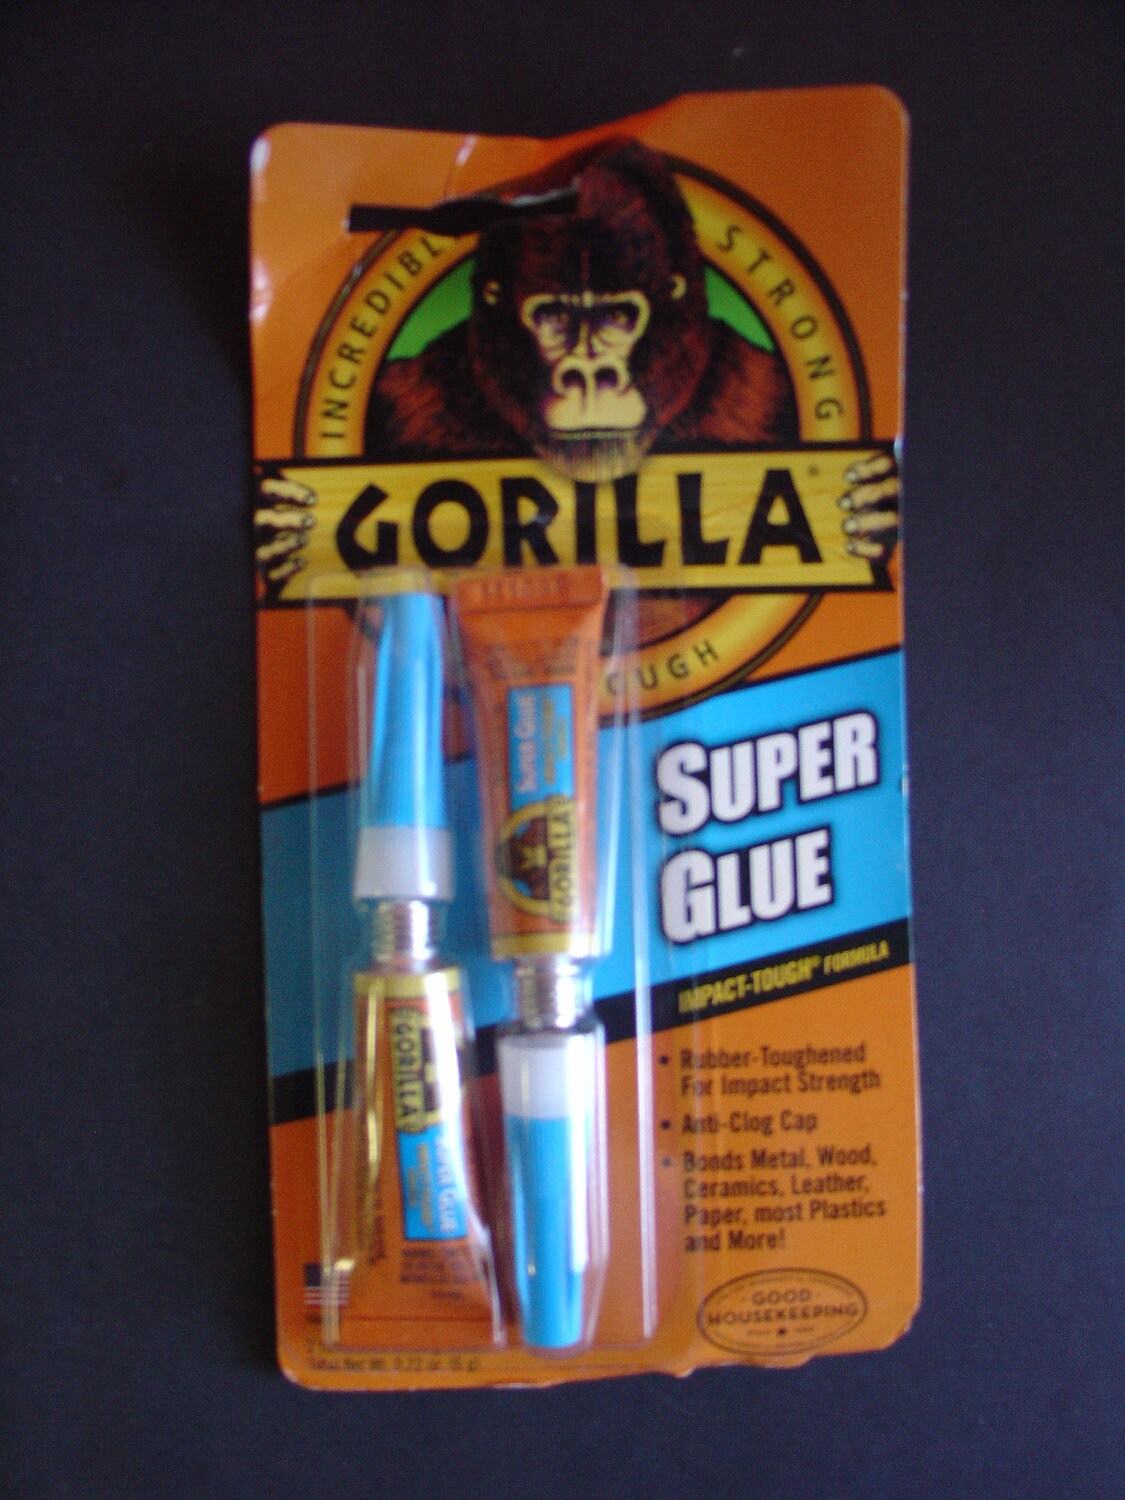 Does Gorilla Glue Bond Metal To Plastic